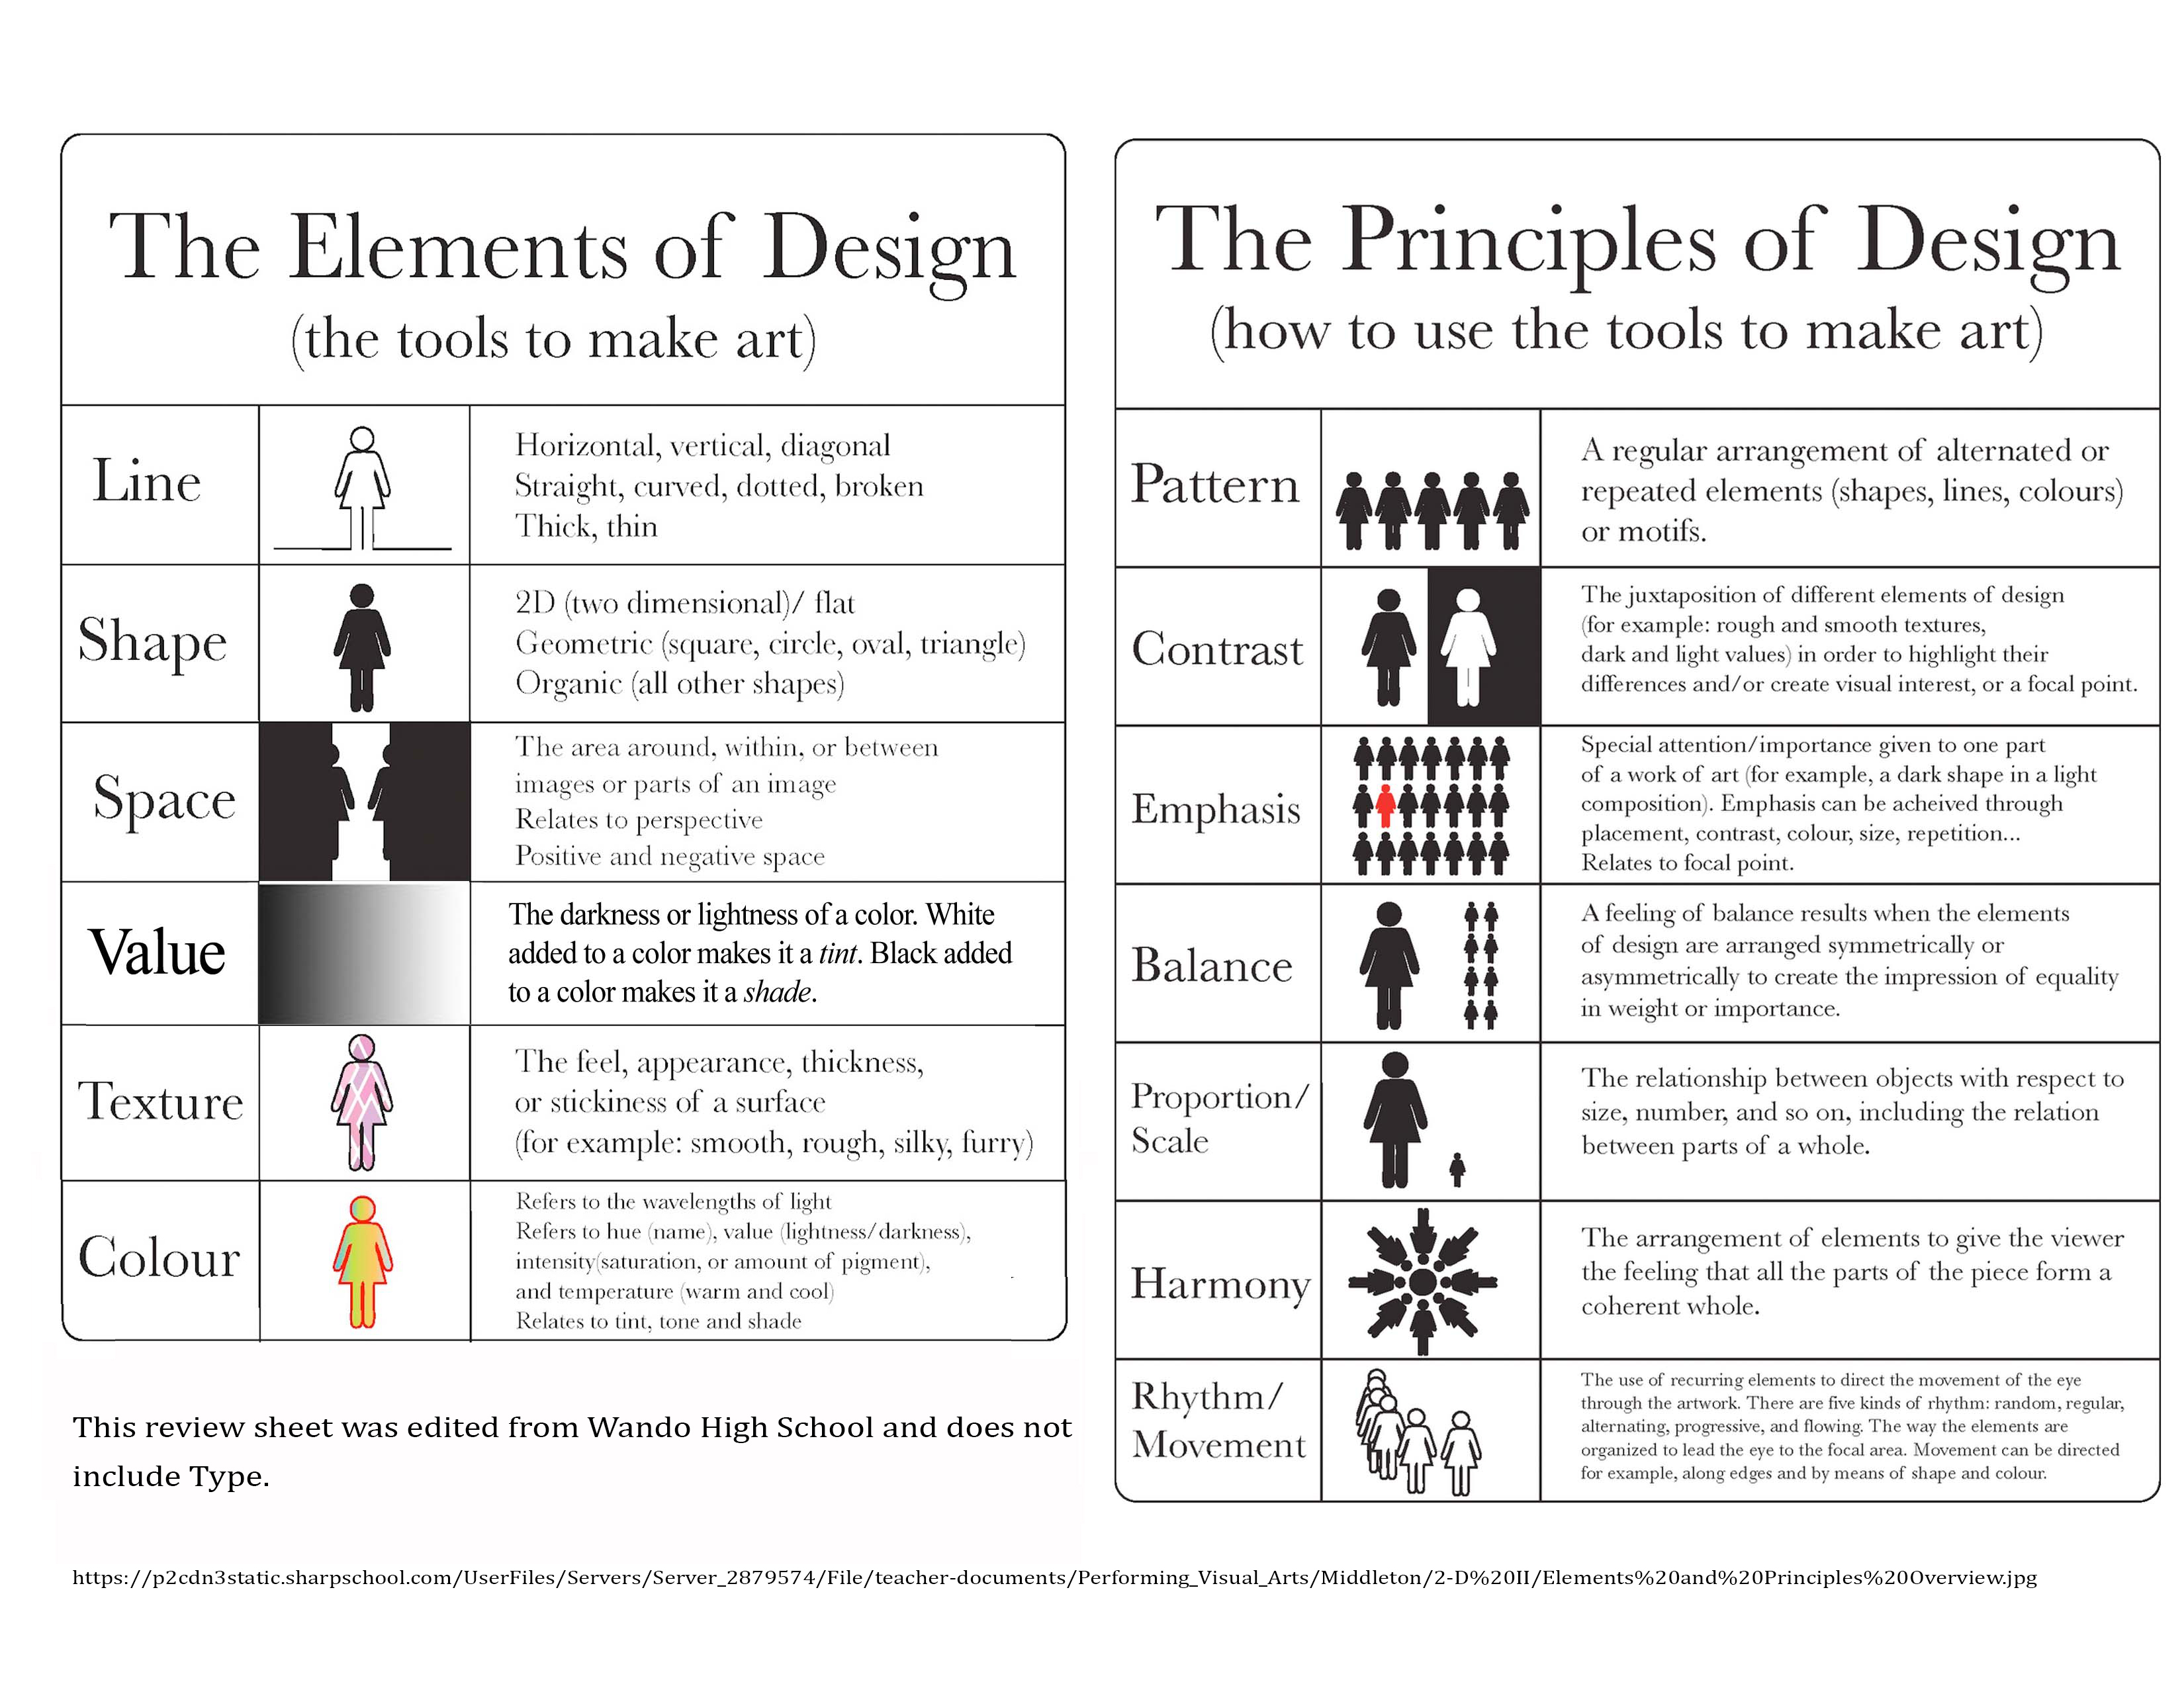 Elements & Principles of Design Overview